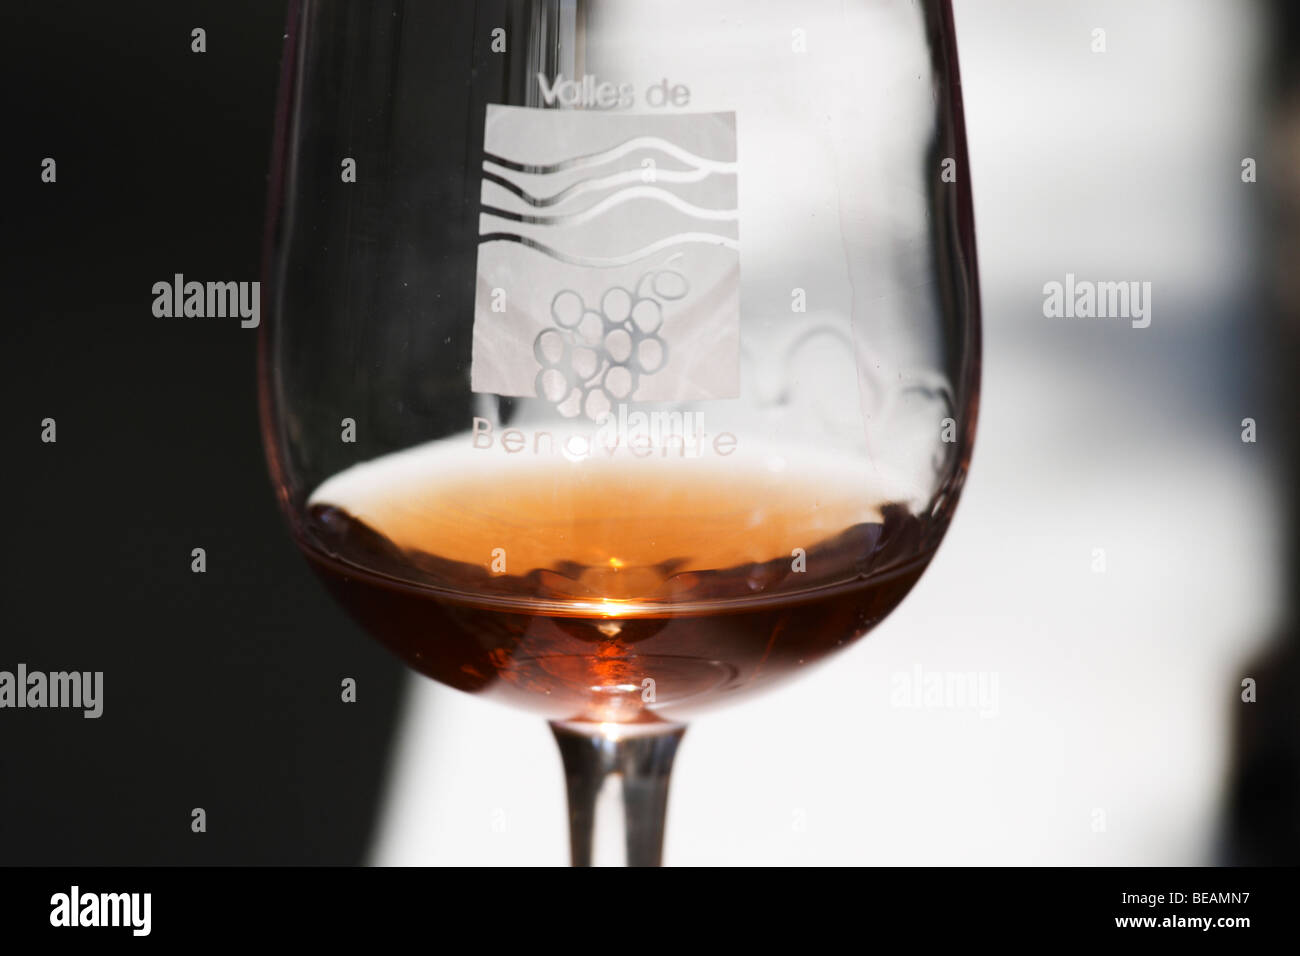 glass with 1970 rosado rose wine, Bodegas Otero, Benavente spain castile and leon Stock Photo